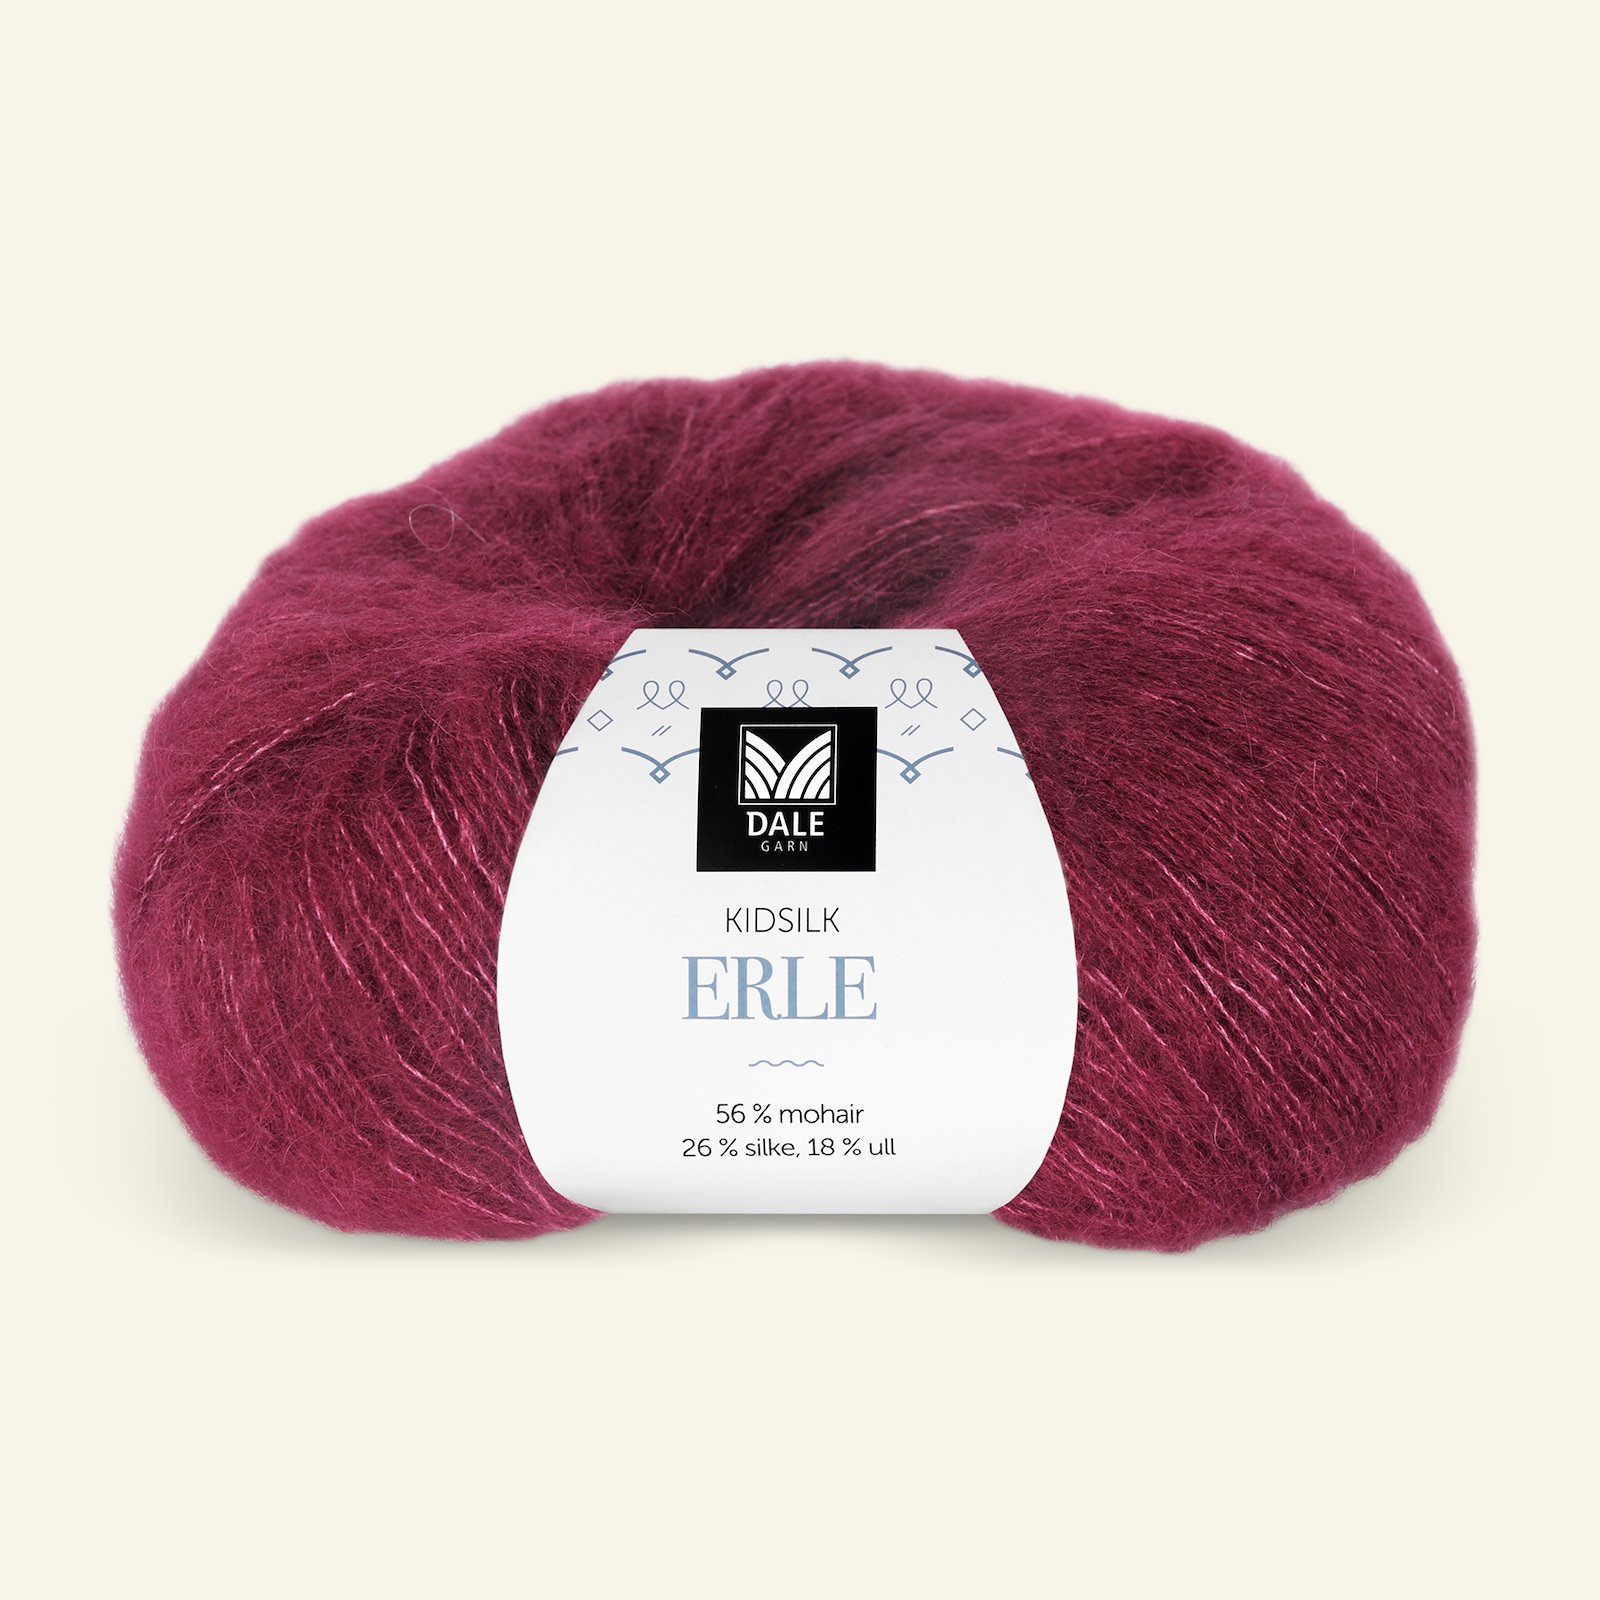 Dale Garn, silk mohair wool yarn "Kidsilk Erle", dusty rose (4026) 90000780_pack